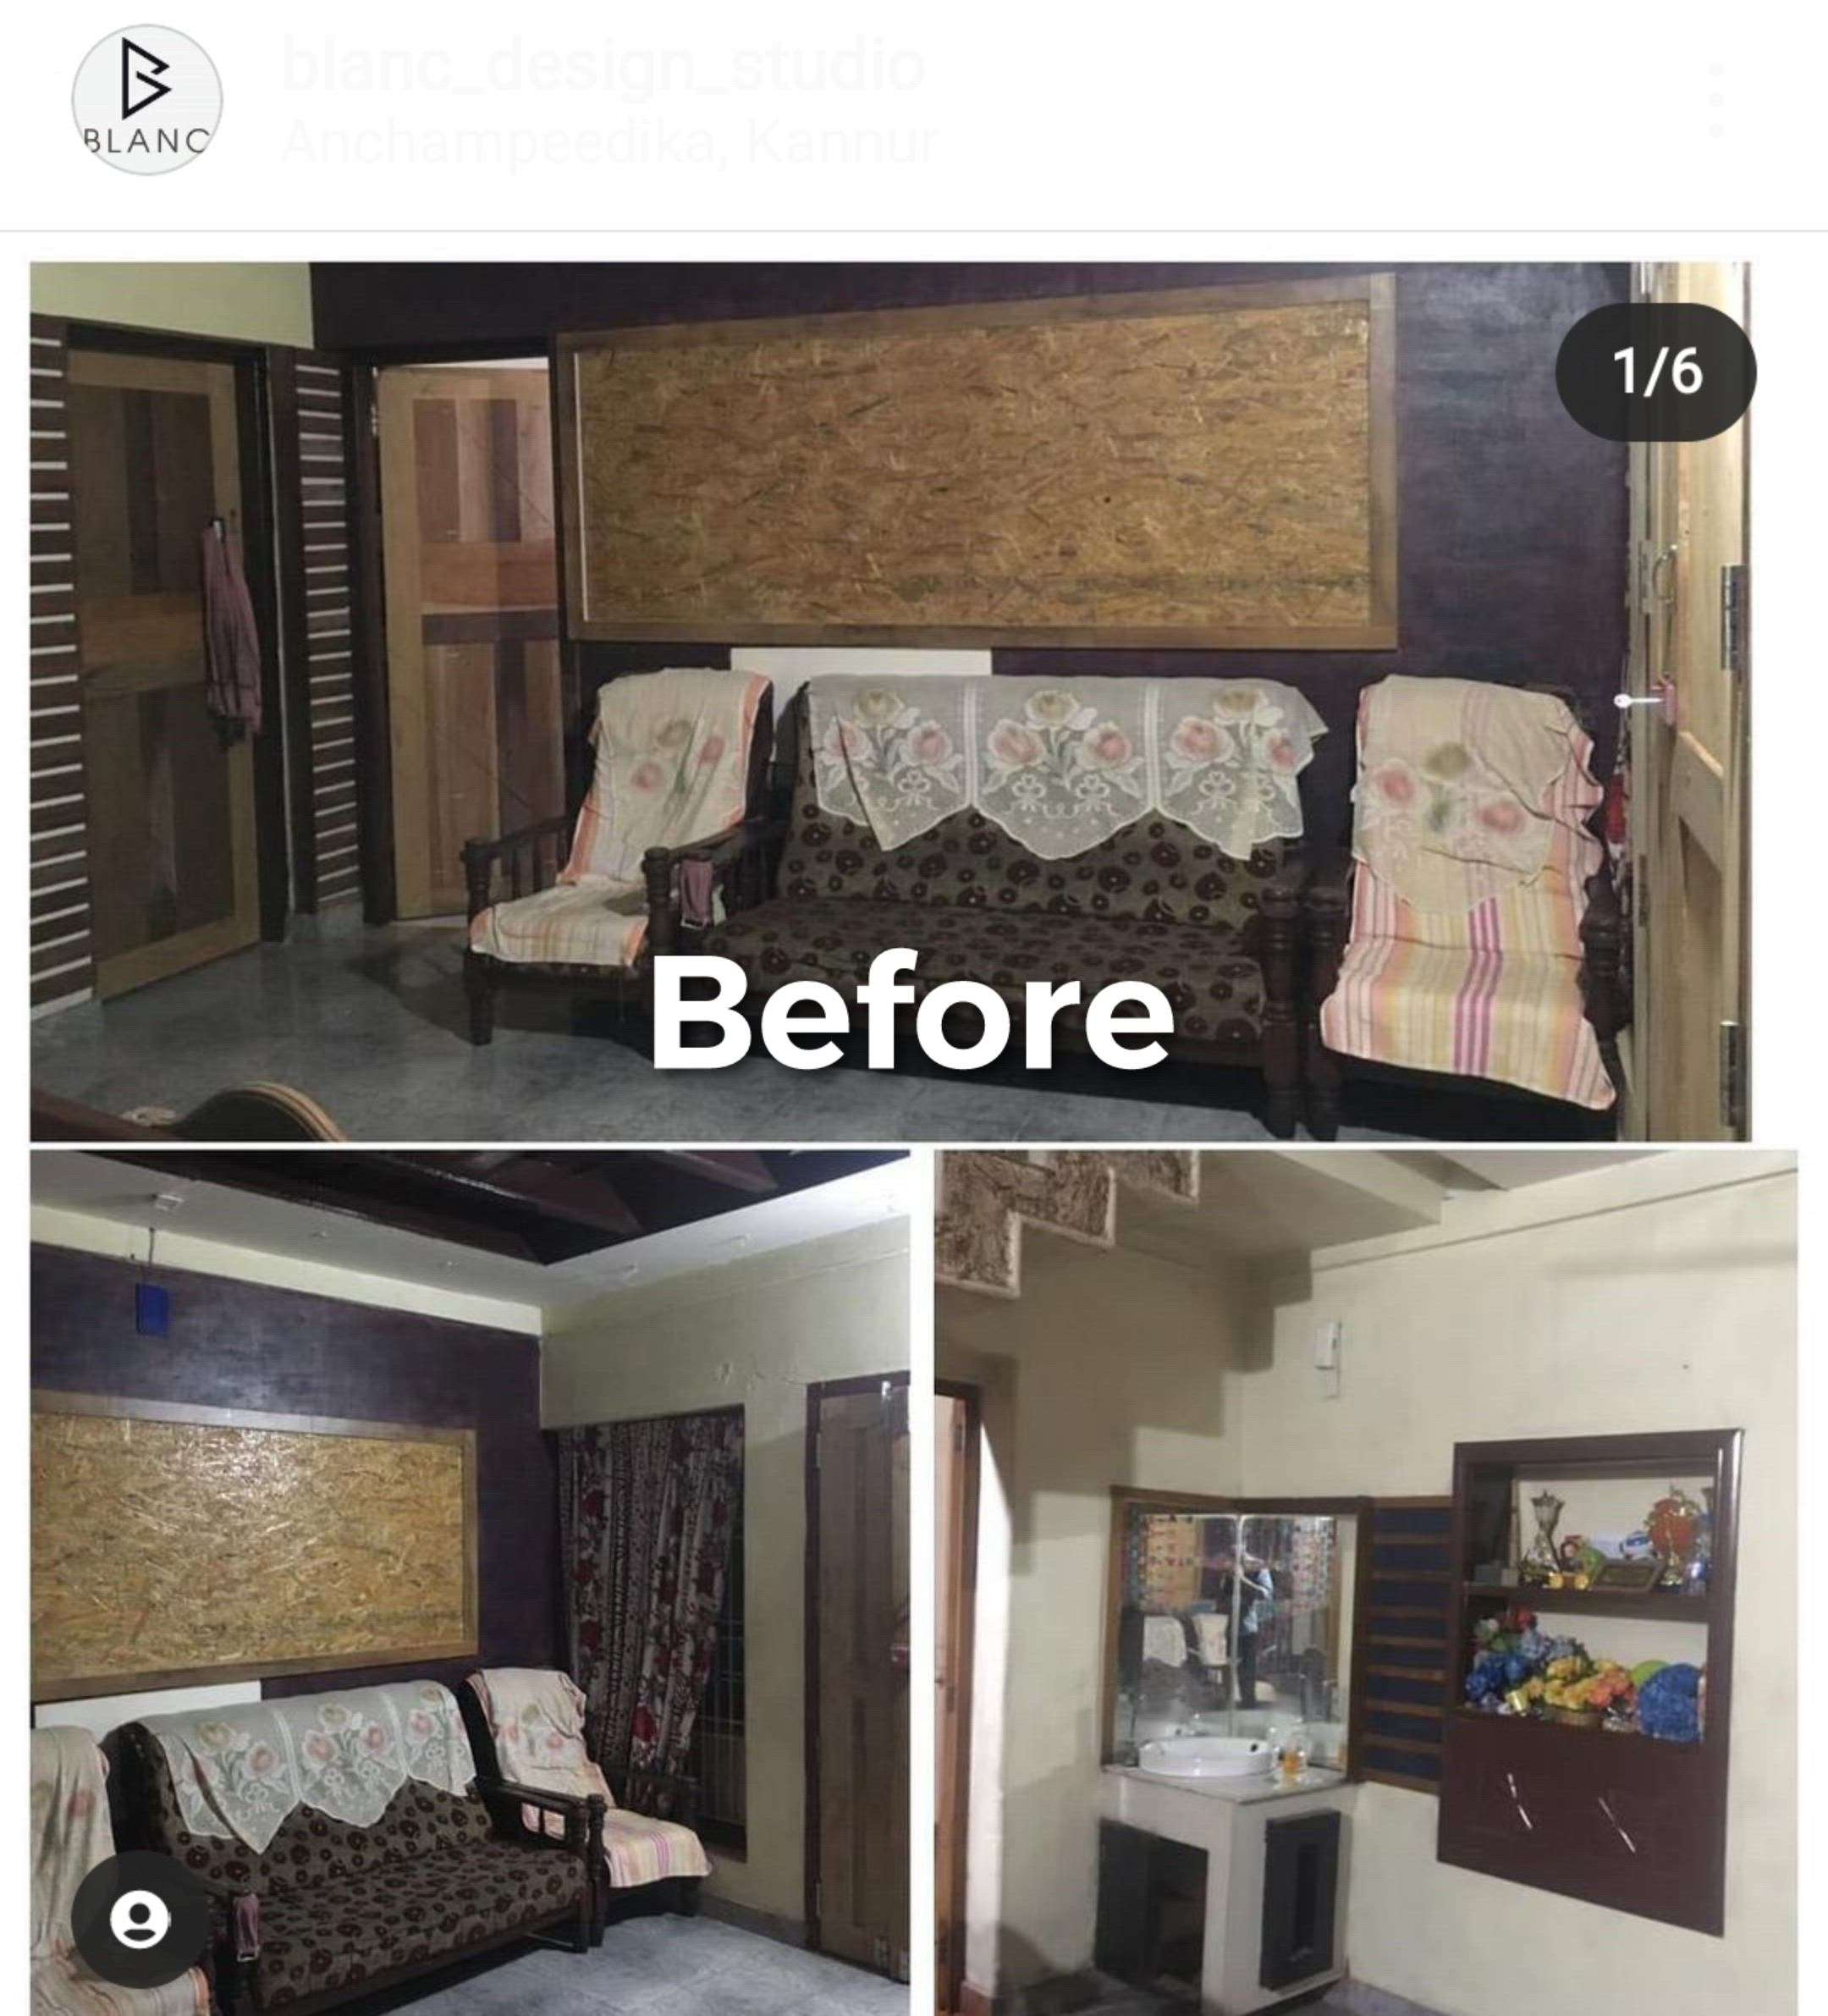 Interior finished Renovation
#koloapp #Kannur #Architectural&Interior #Kannur